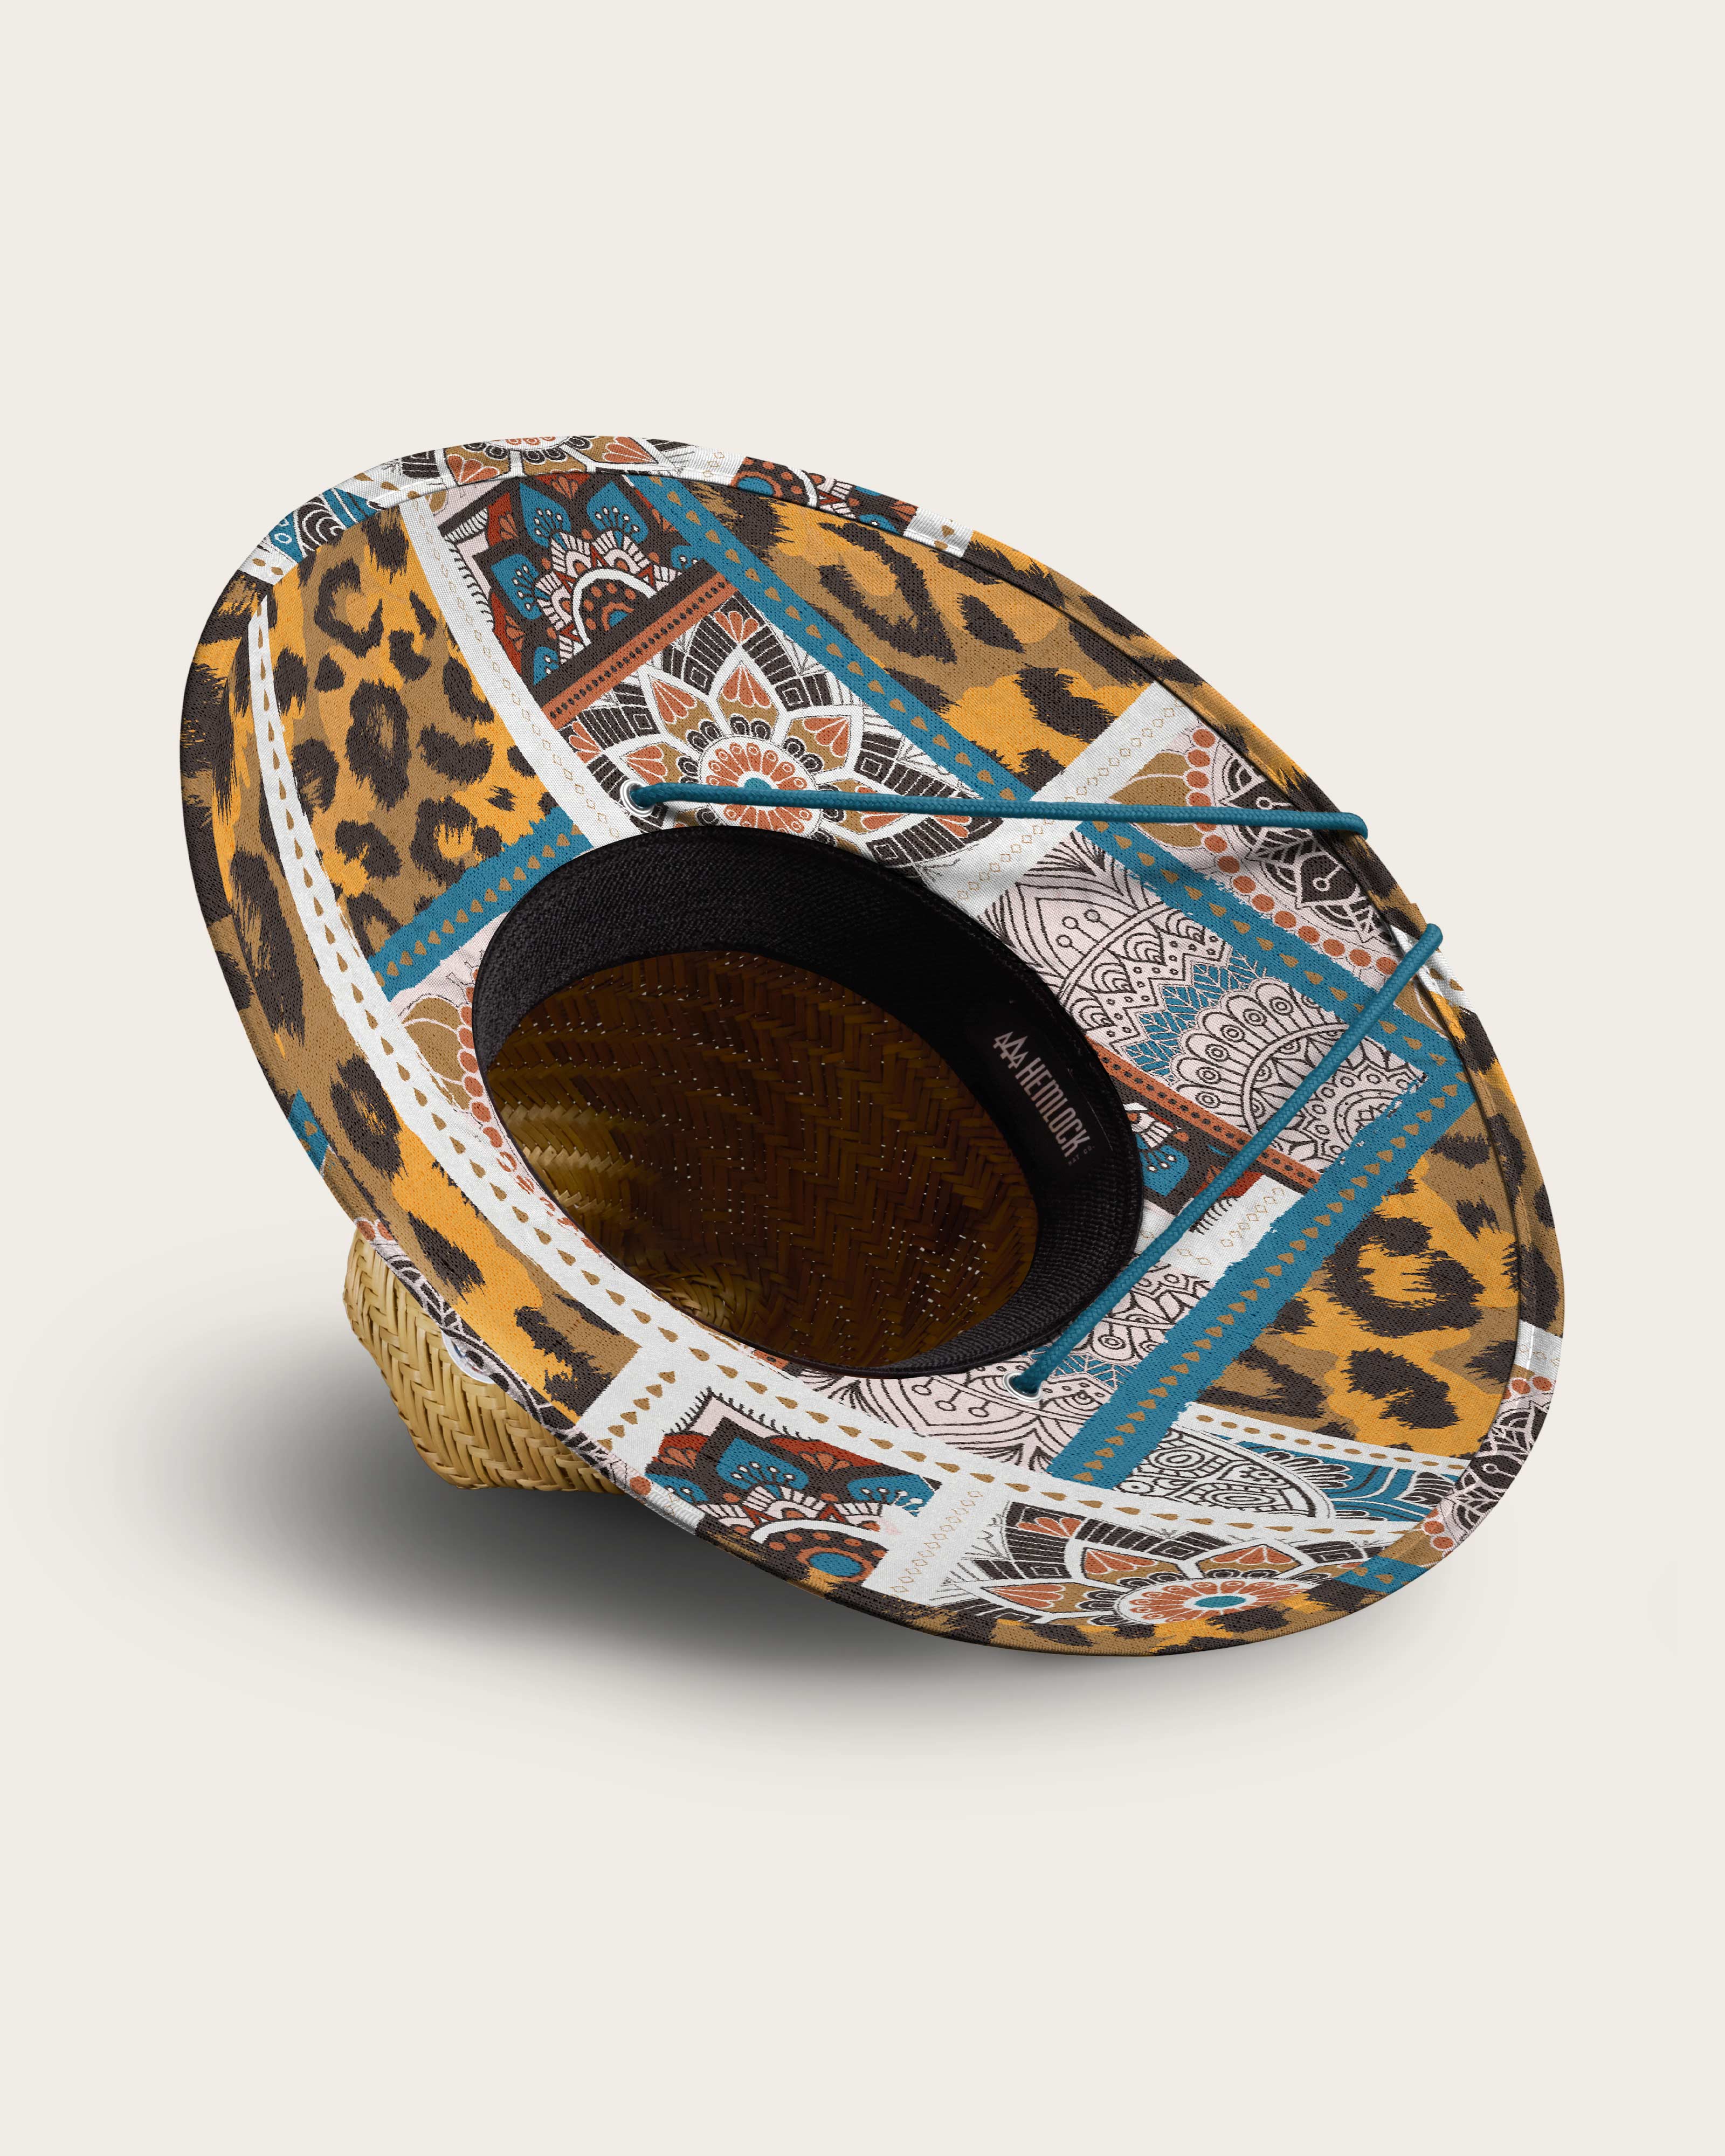 Hemlock Bazaar straw lifeguard hat with cheetah mosaic pattern detailed view